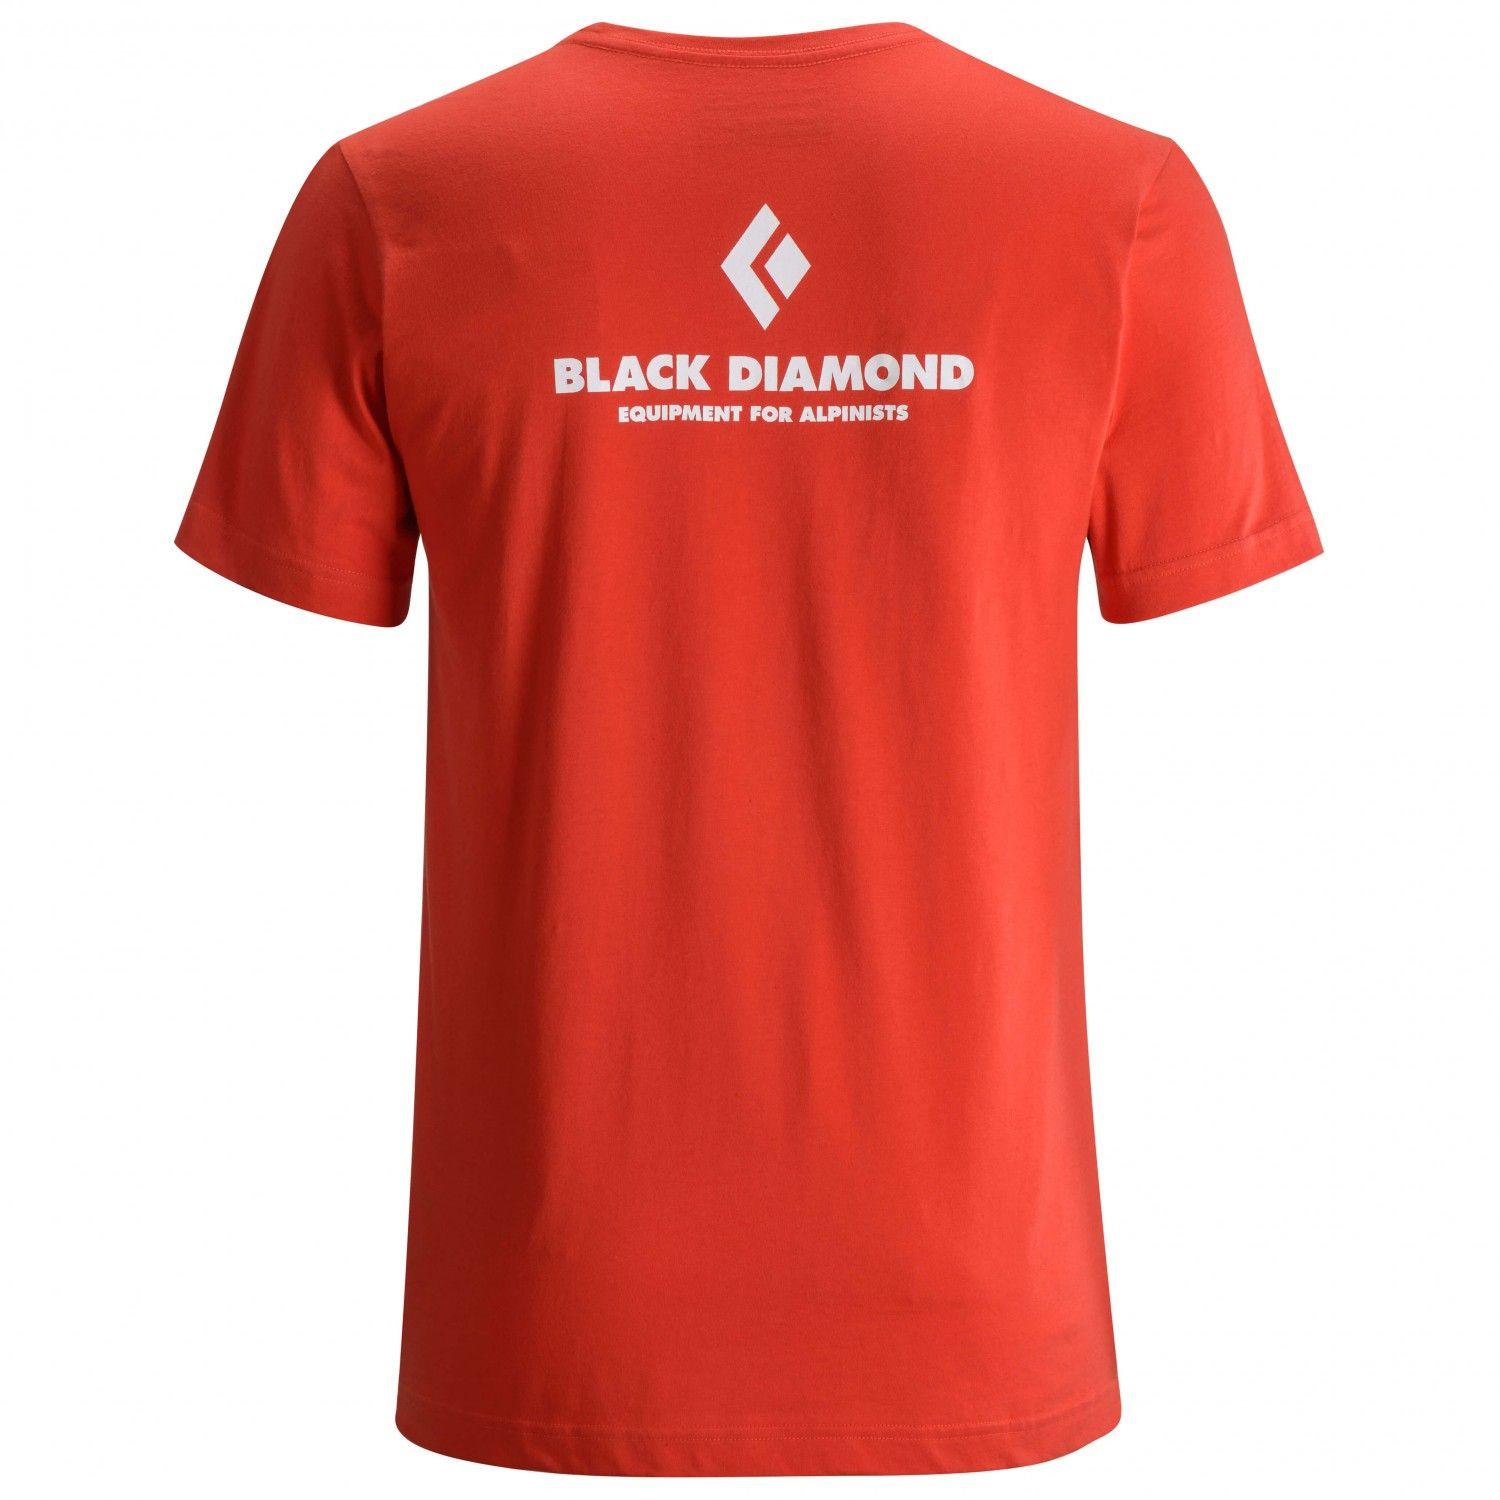 Red and Black Diamond Logo - Black Diamond S/S Equipment For Alpinist Tee - T-Shirt Men's | Buy ...